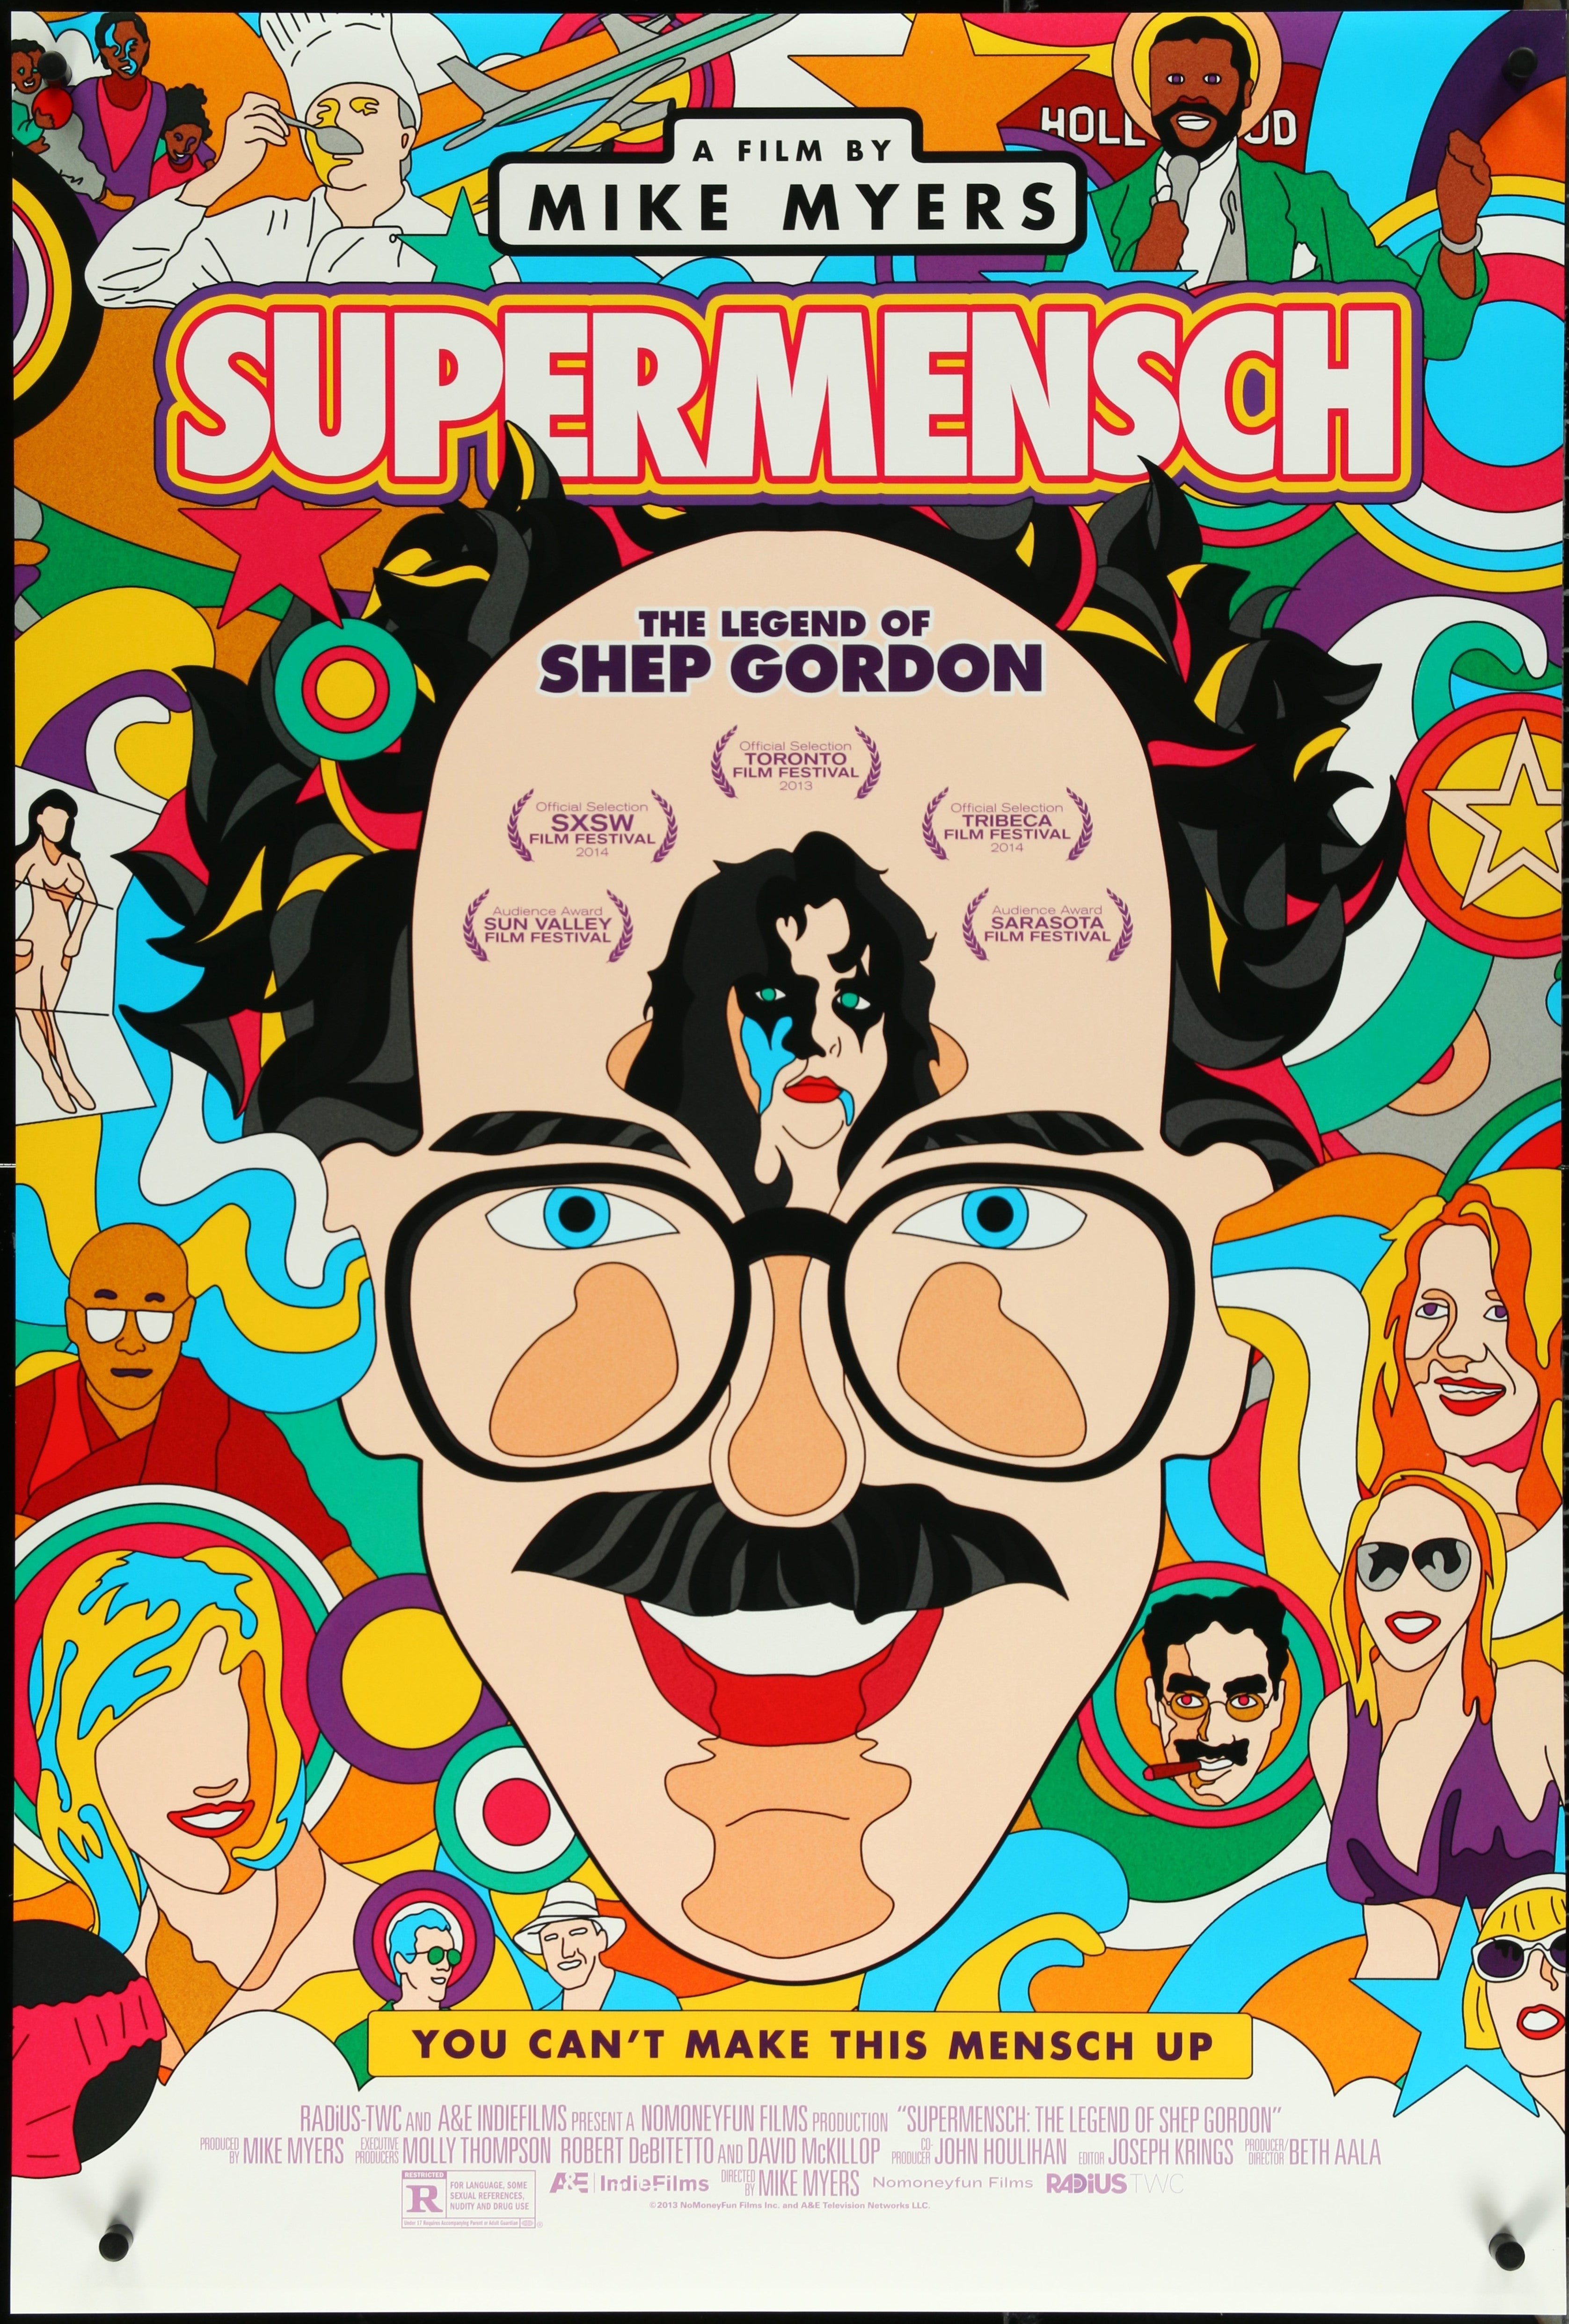 SUPERMENSCH: THE LEGEND OF SHEP GORDON (2013)